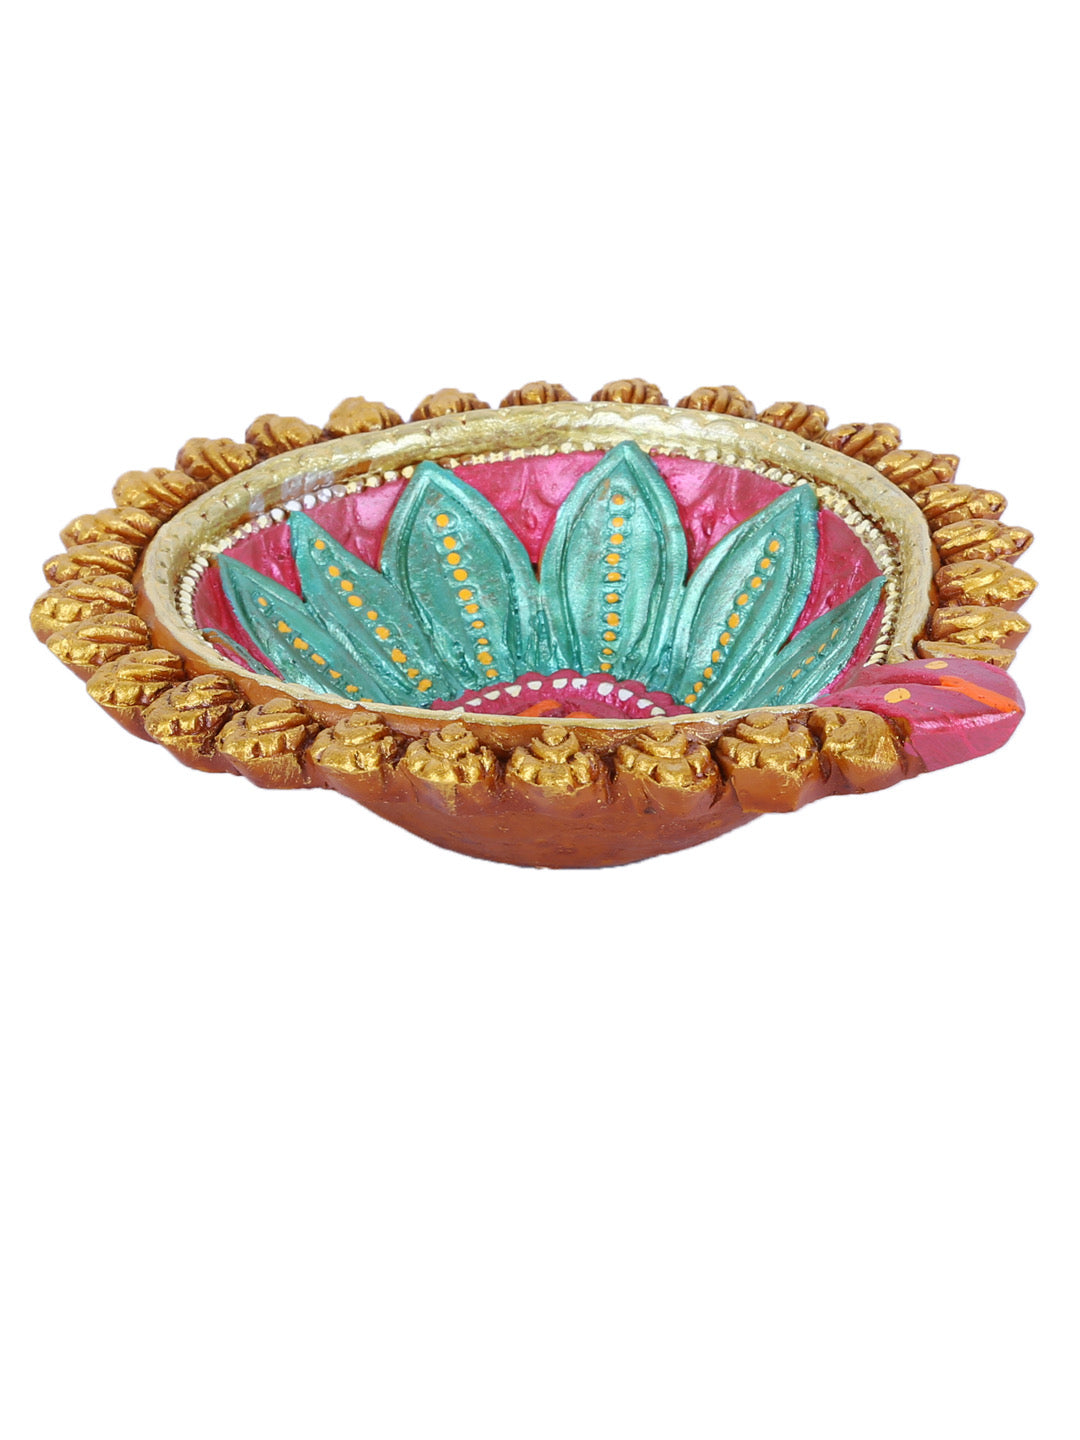 Aapno Rajasthan Floral design Multicolor Terracotta Handcrafted Diya for Diwali - 1 pc - Default Title (DD1824)